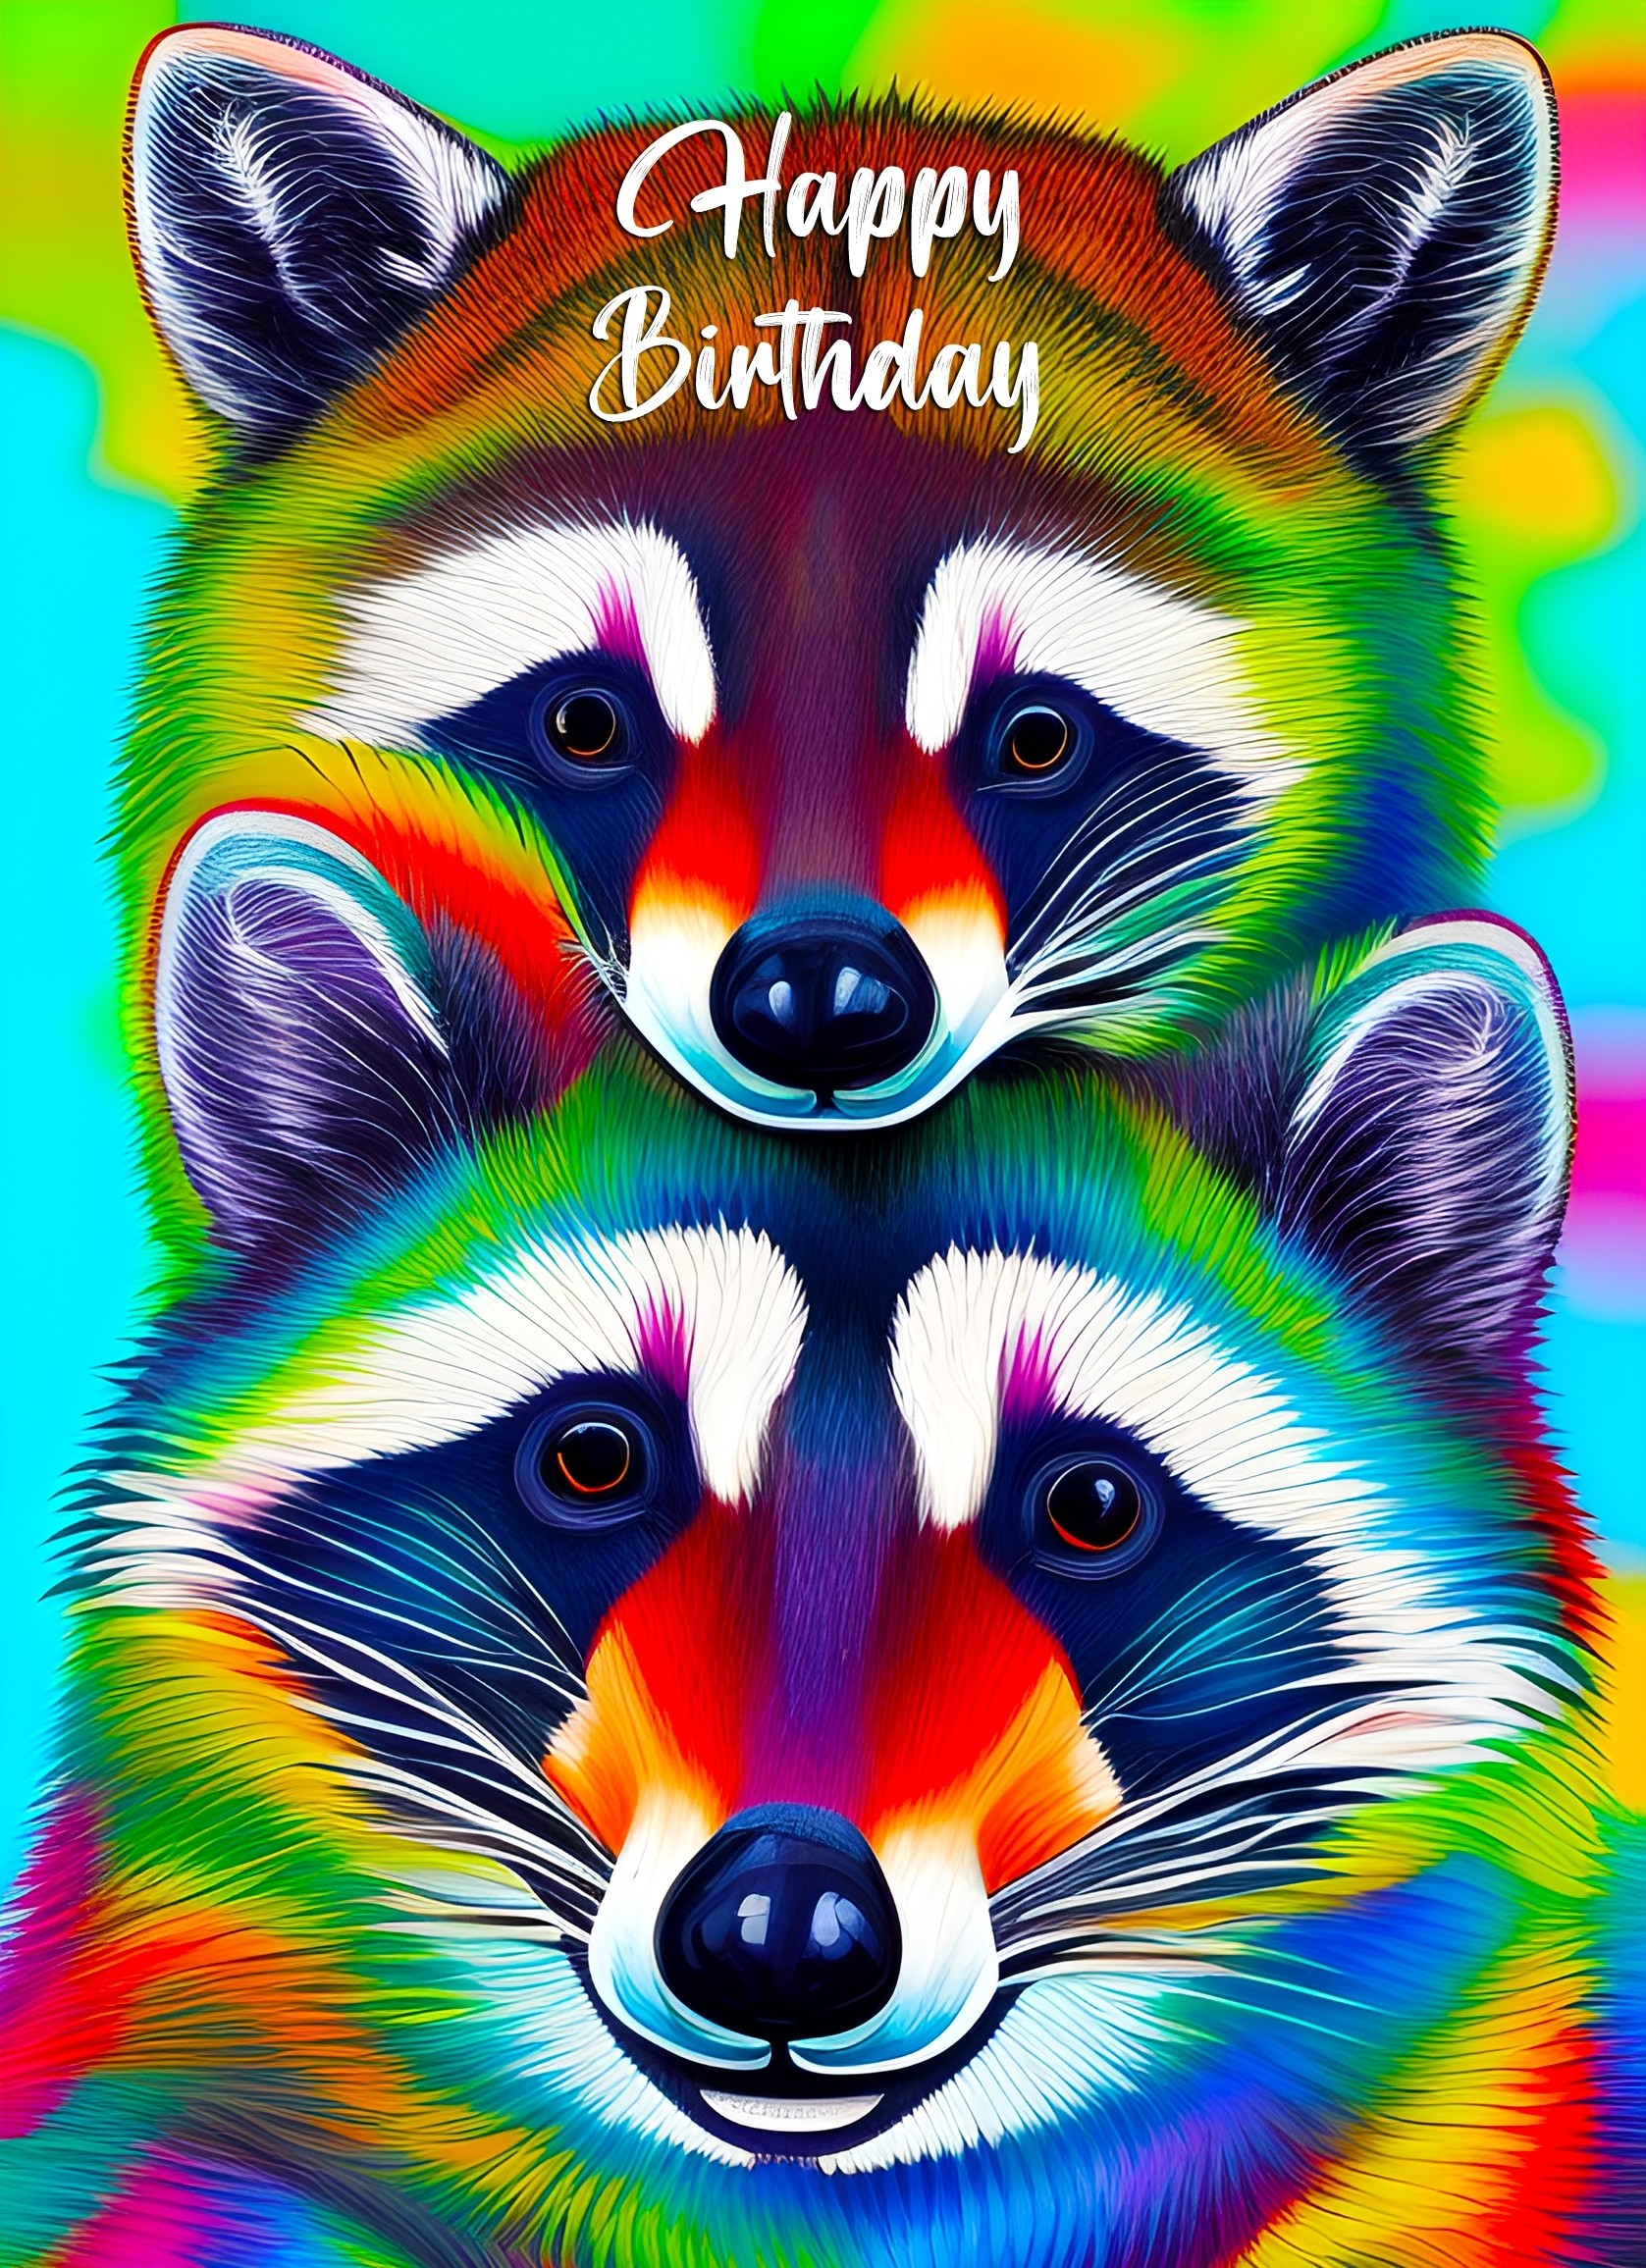 Raccoon Animal Colourful Abstract Art Birthday Card